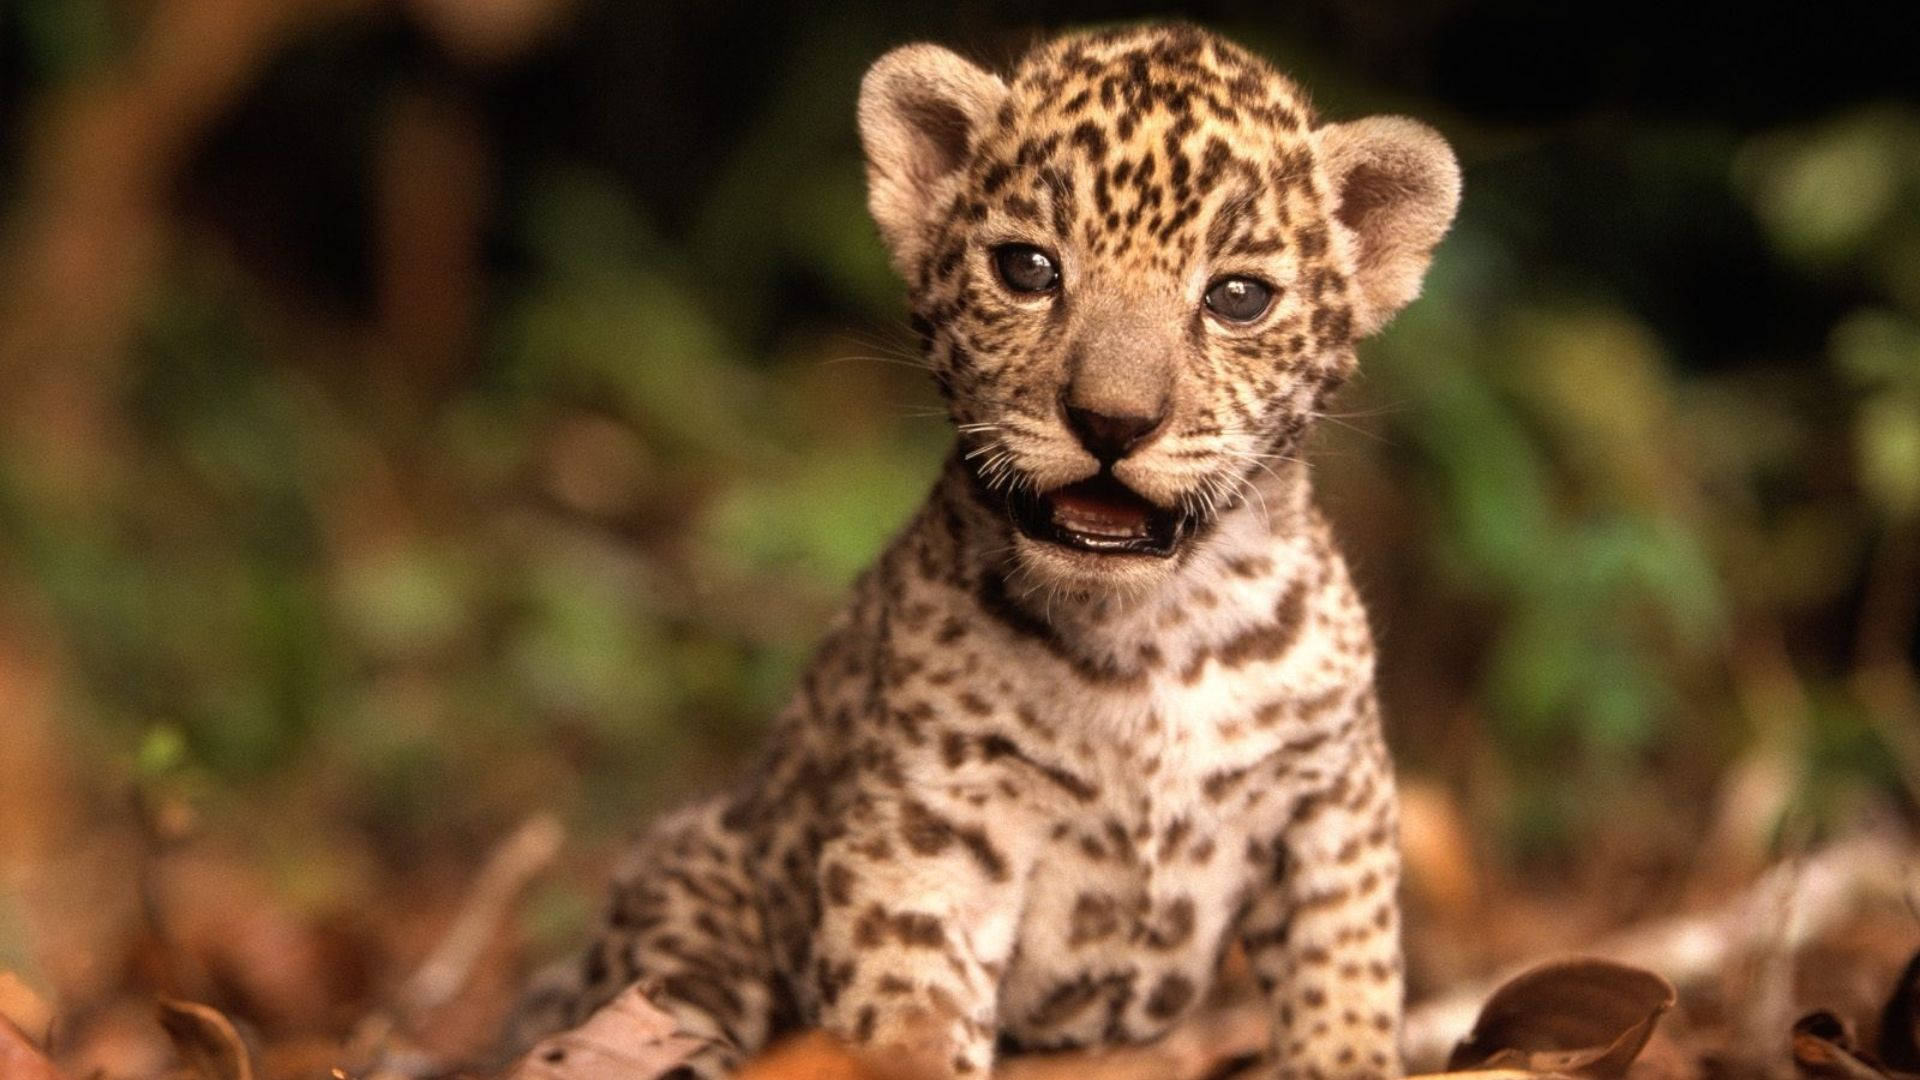 Baby Animal Cheetah On Leaves